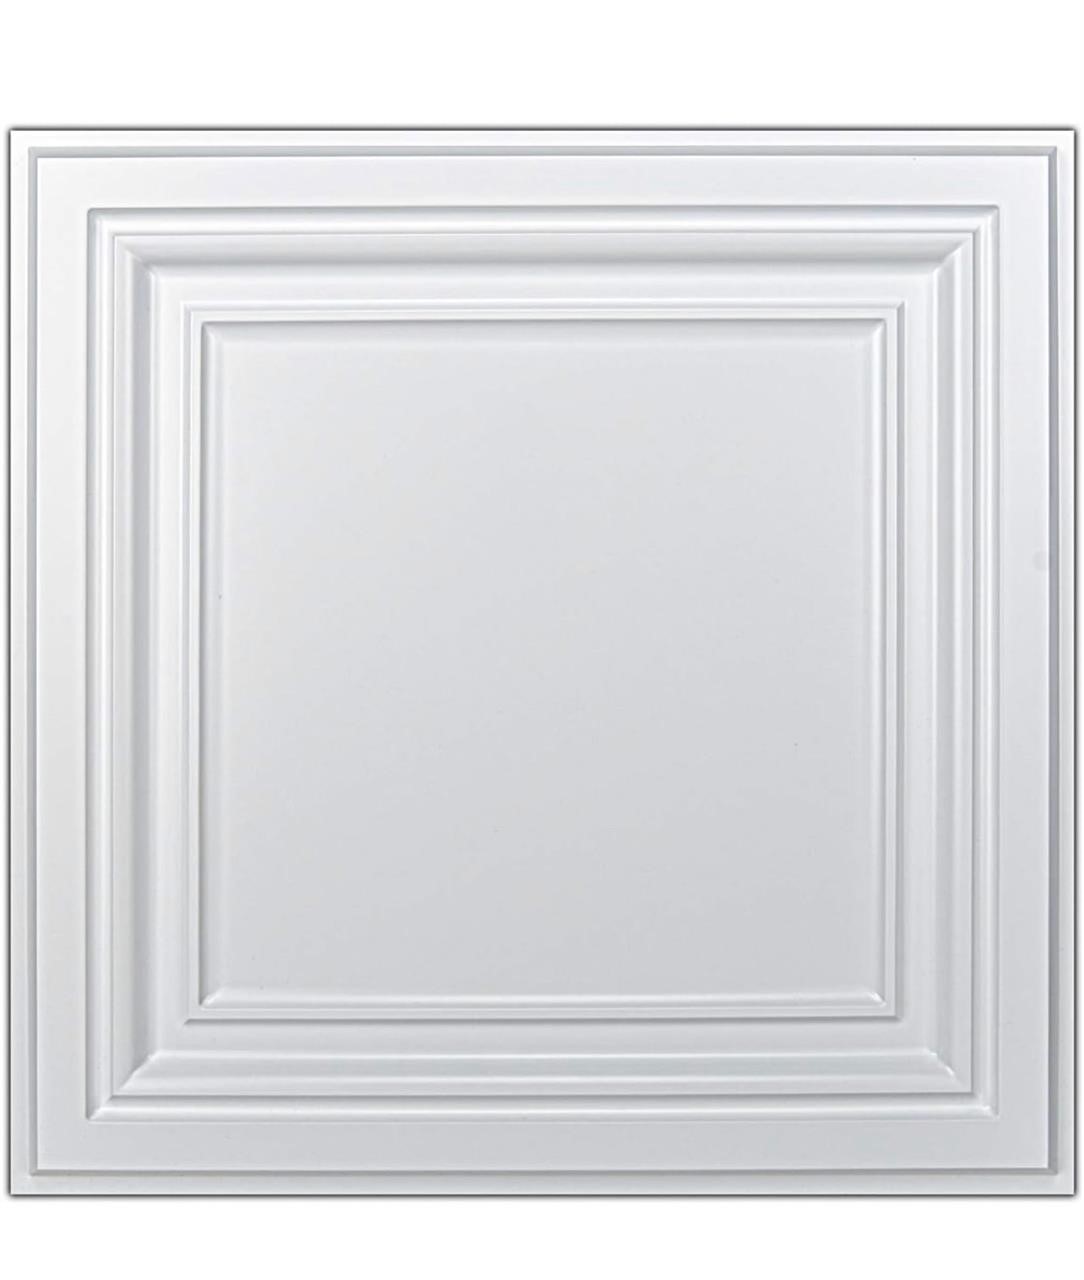 NEW $93 (2'x2') 12-Pcs Plastic PVC Ceiling Tiles